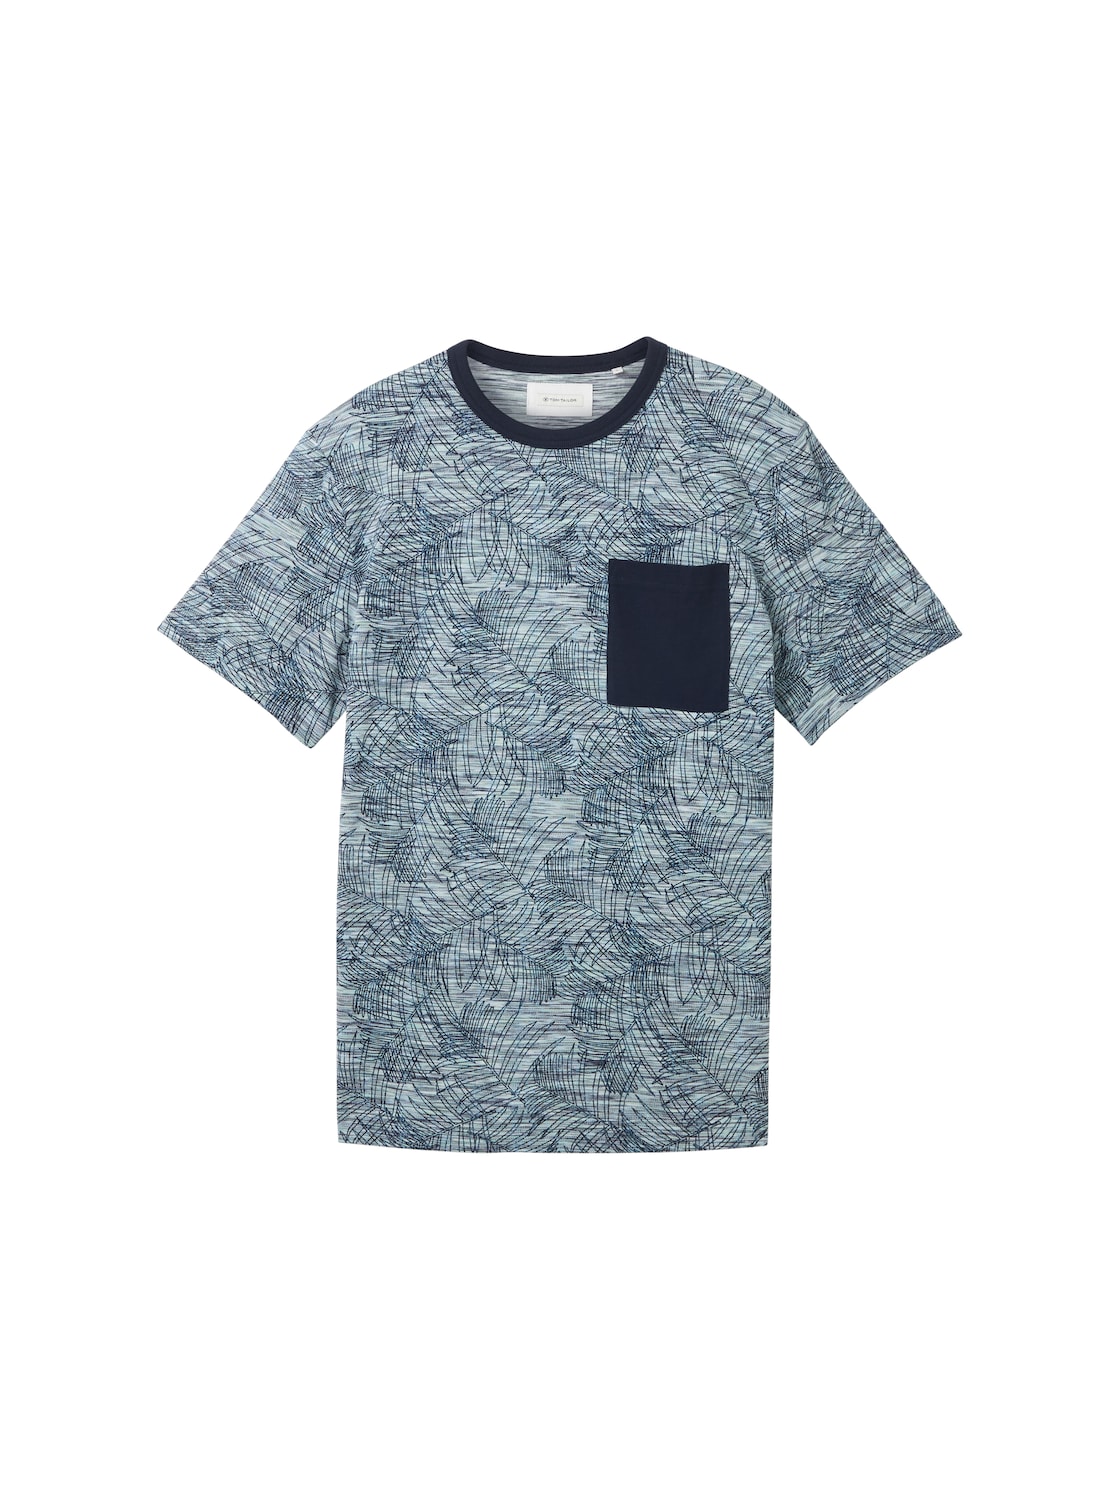 TOM TAILOR Herren T-Shirt mit Allover Print, blau, Allover Print, Gr. XL von Tom Tailor